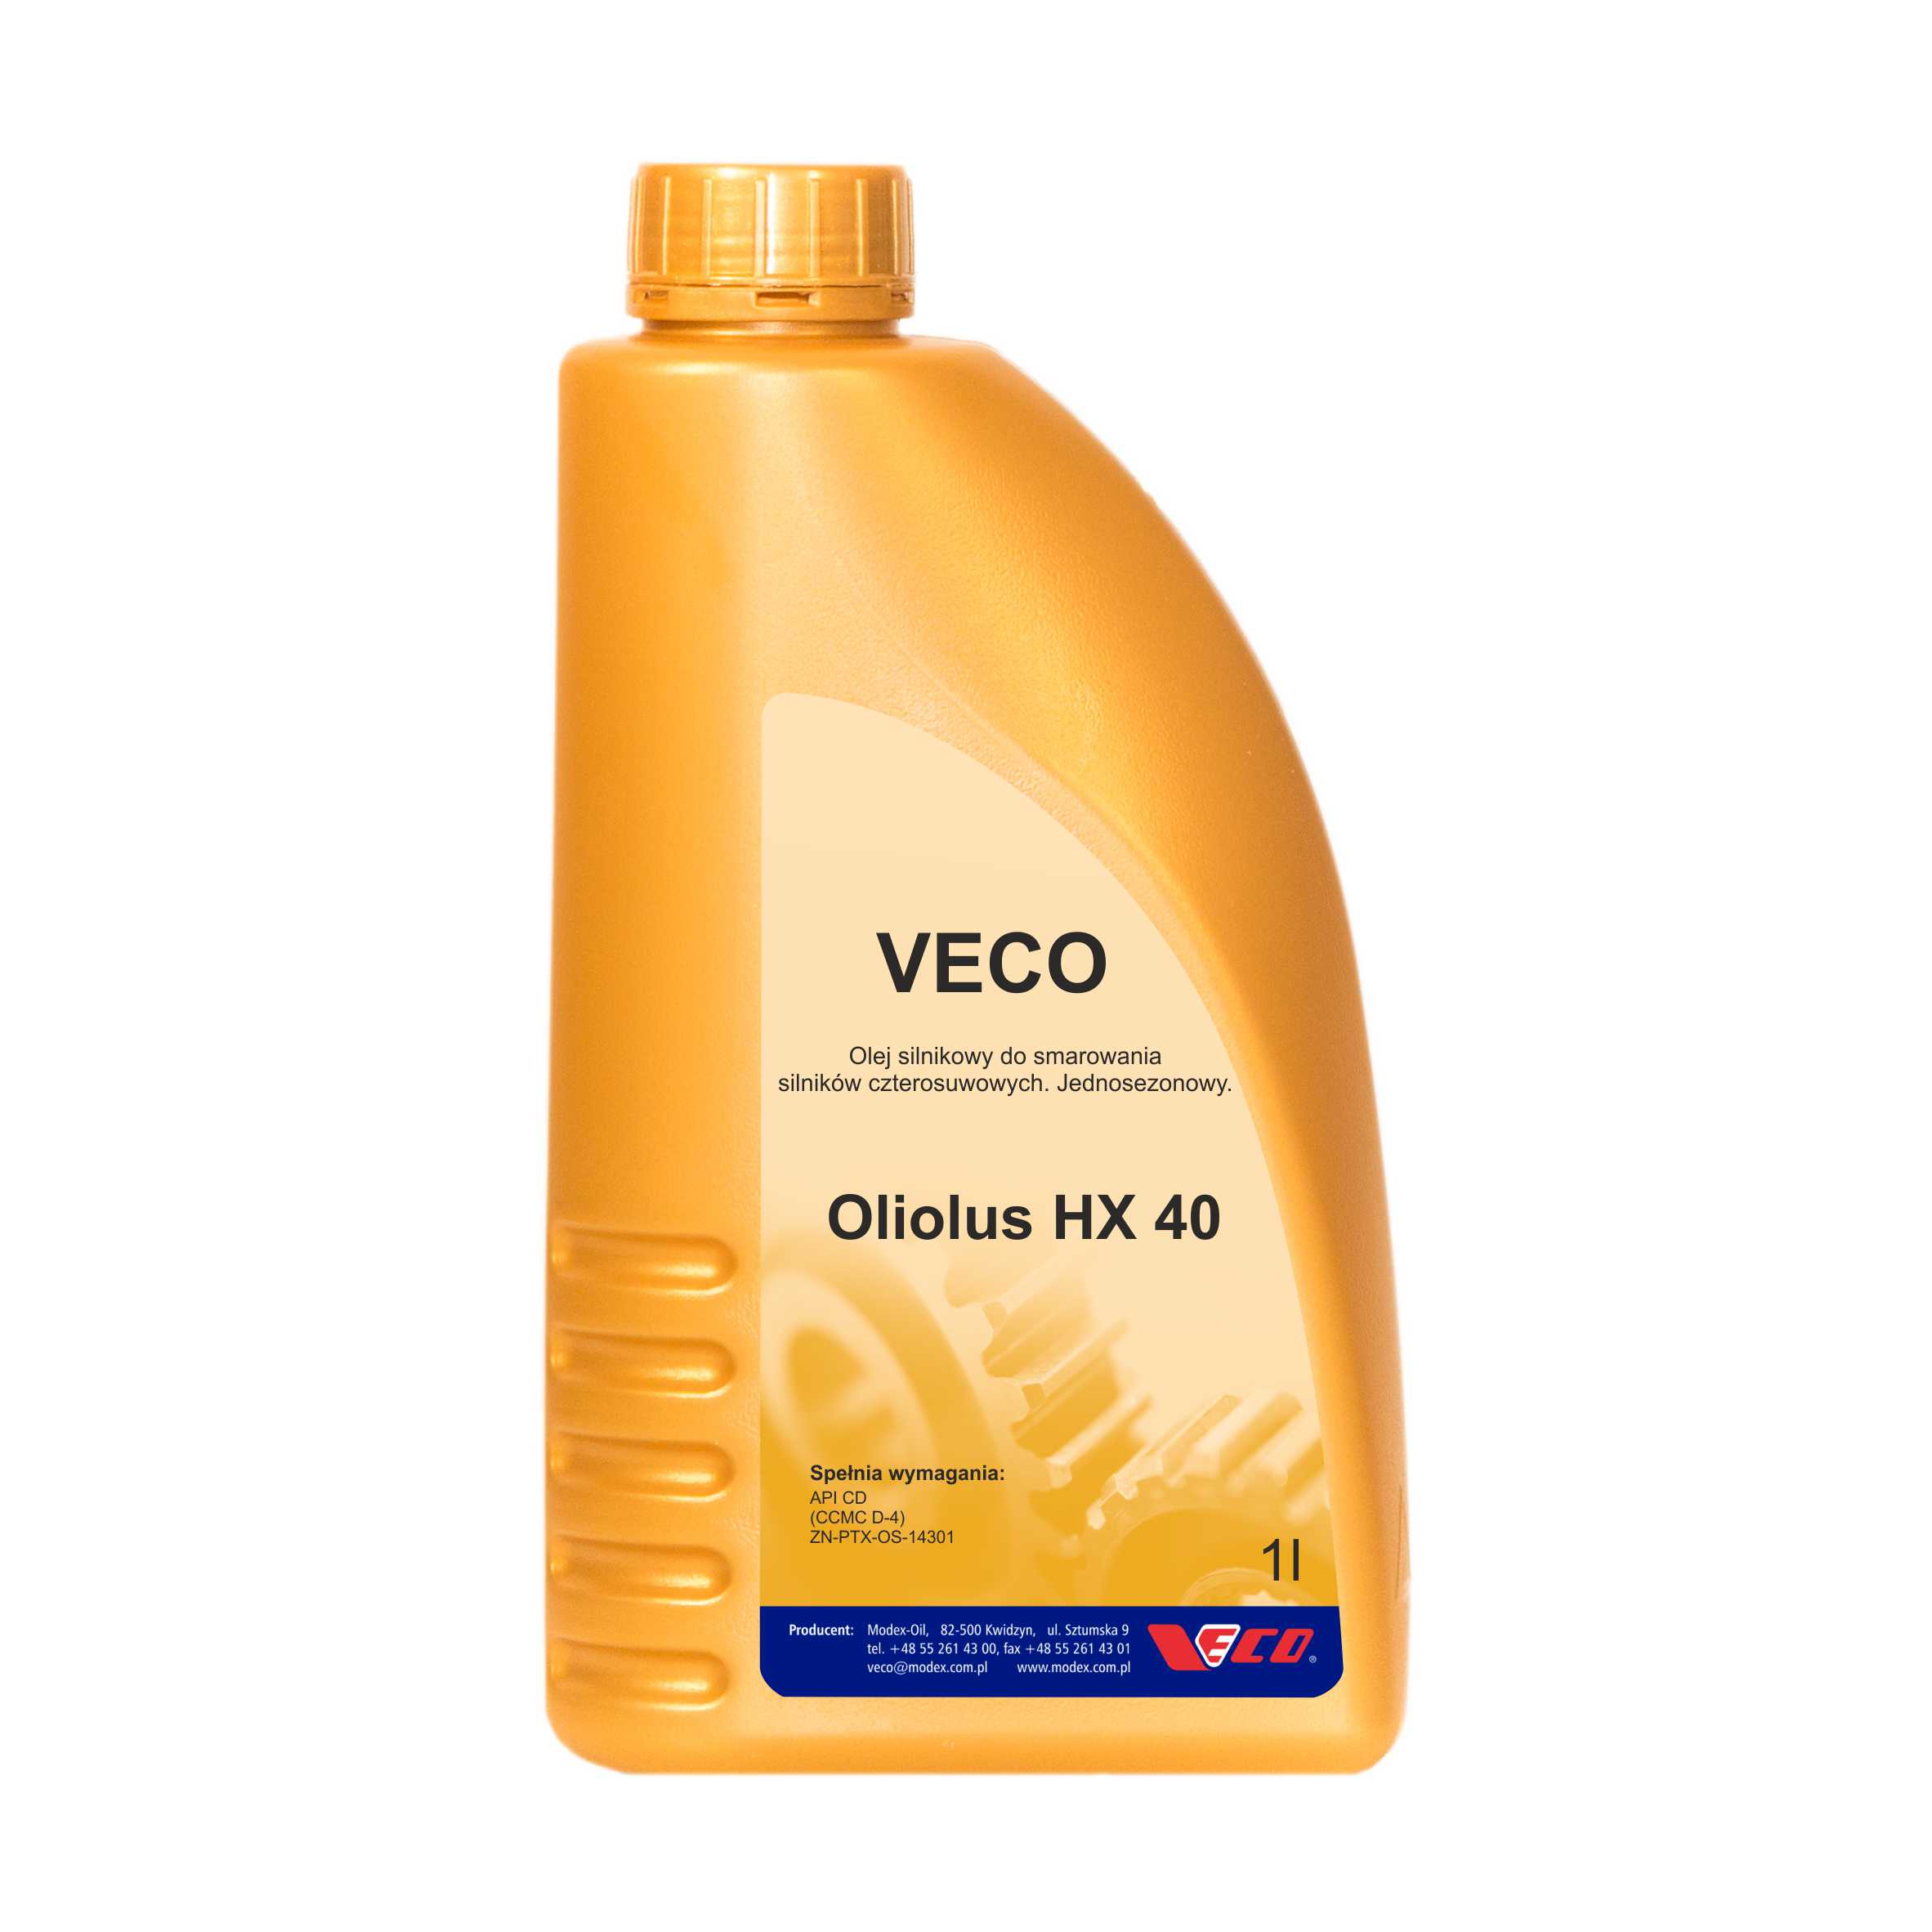 VECO Oliolus HX40 opak. 1L class=